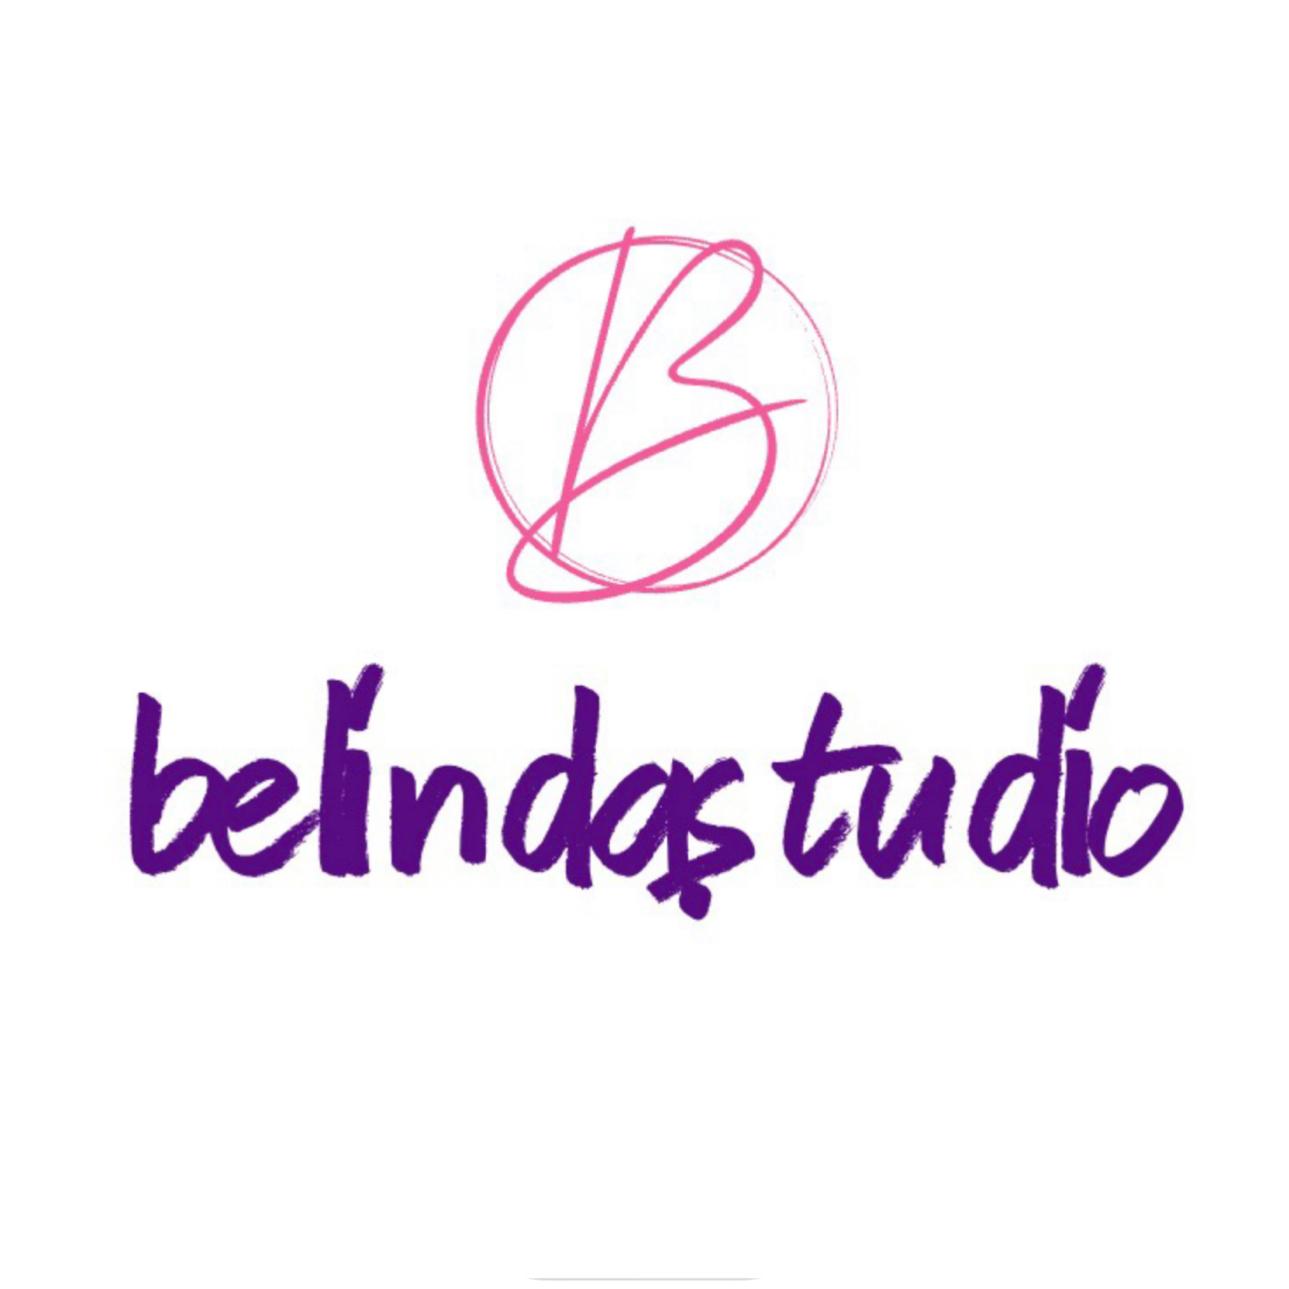 Belinda.Studio's images